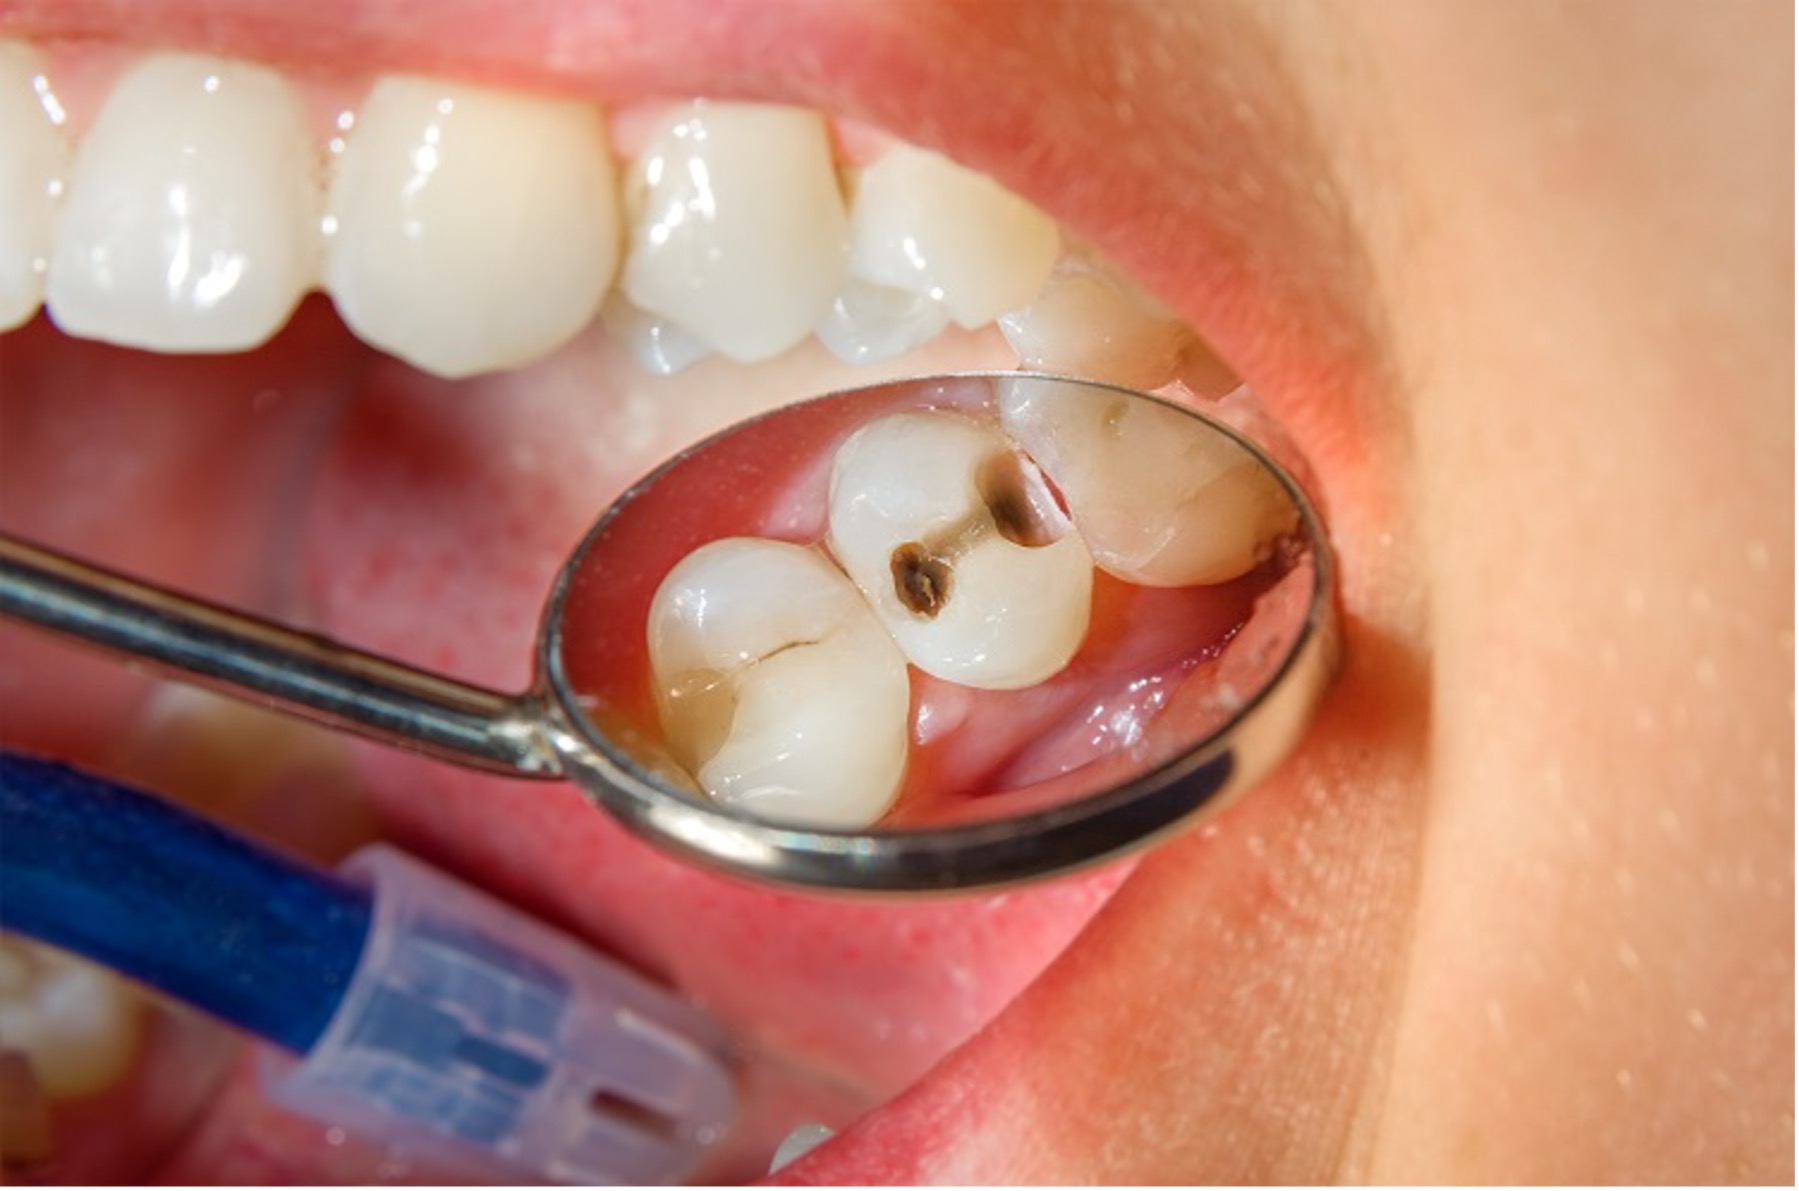 Rampant Dental Diseases Since COVID-19